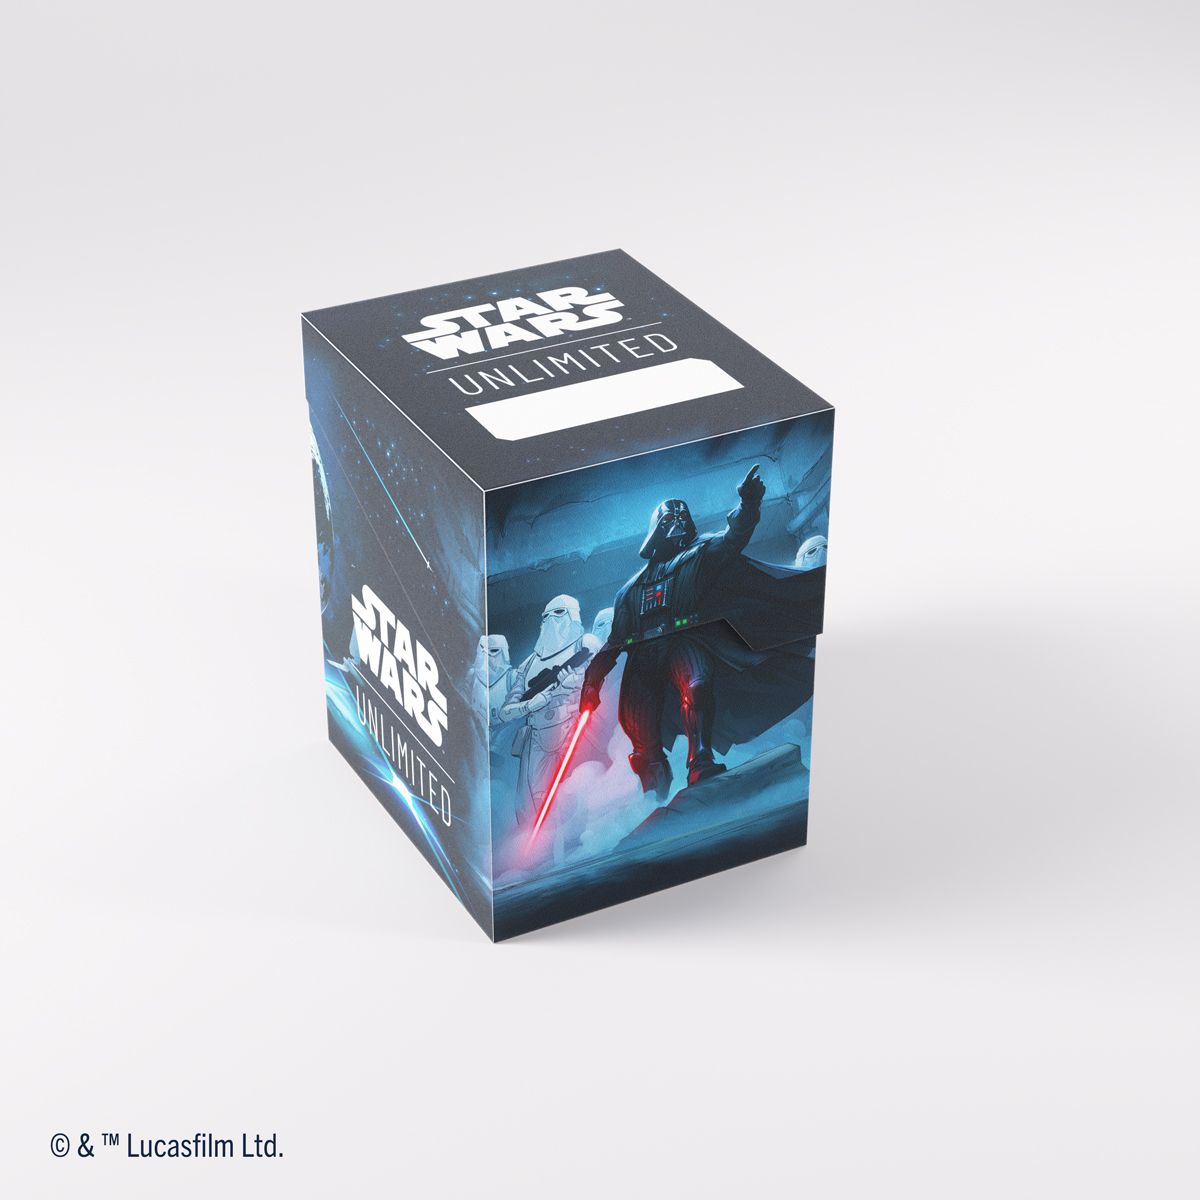 Gamegenic - Deck Box - Soft Crate - Star Wars: Unlimited - Darth Vader